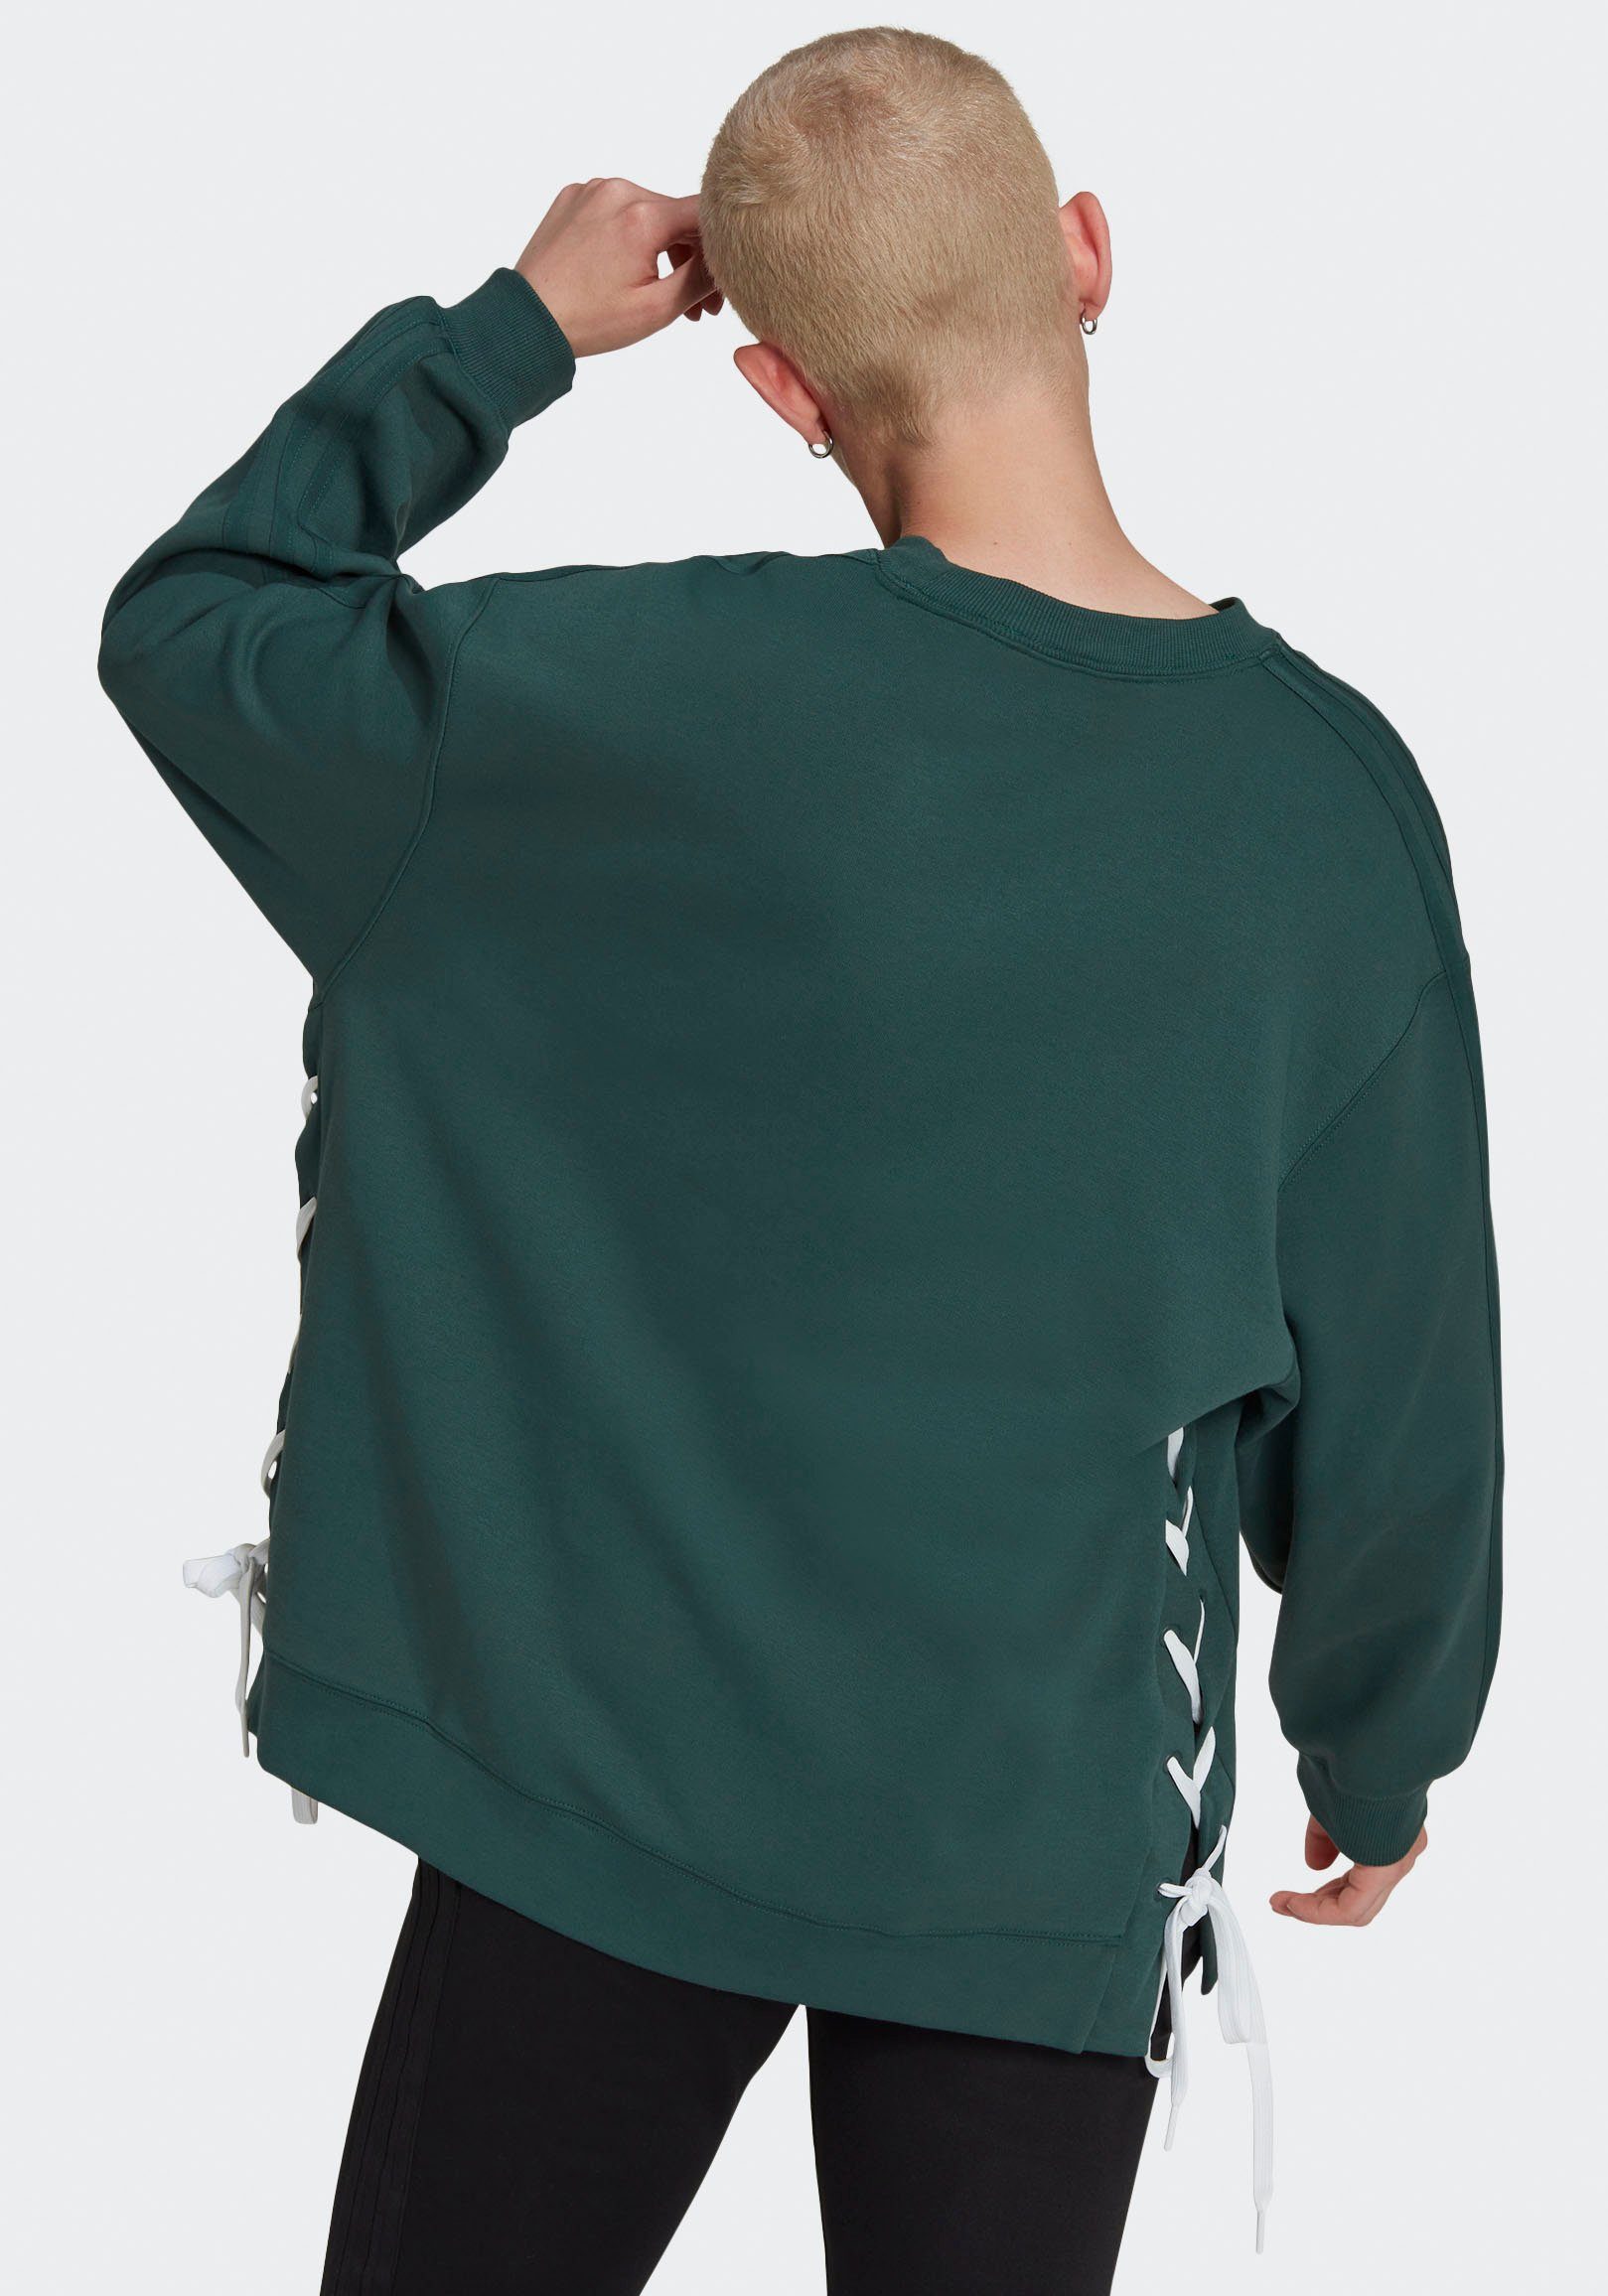 MINGRE adidas ALWAYS ORIGINAL Originals LACED Sweatshirt